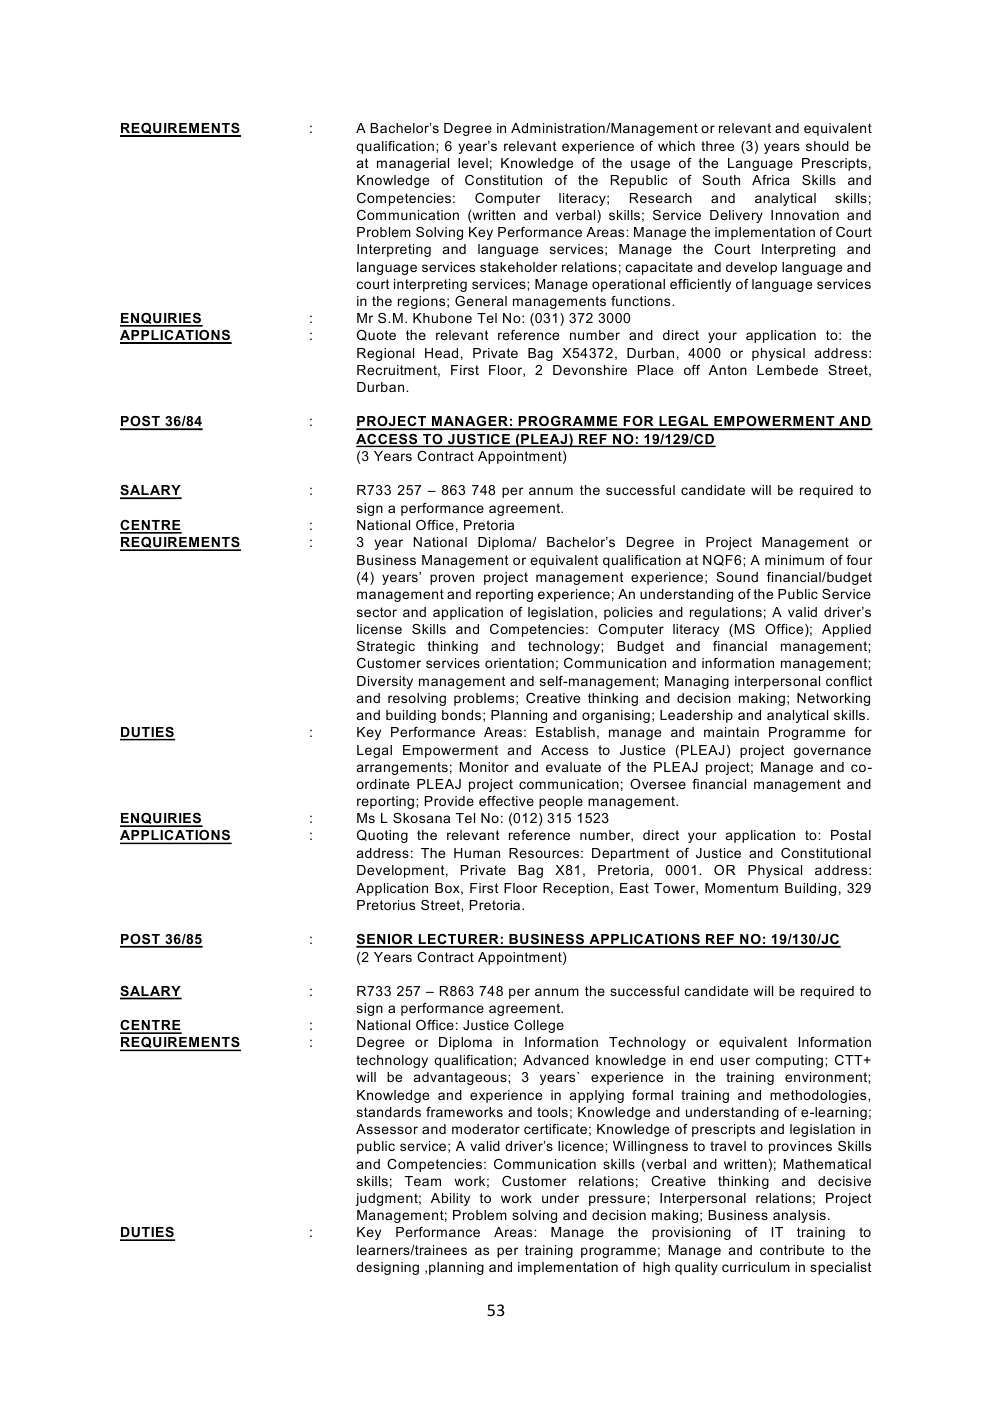 DPSA Vacancies: Department of Justice and Constitutional Development